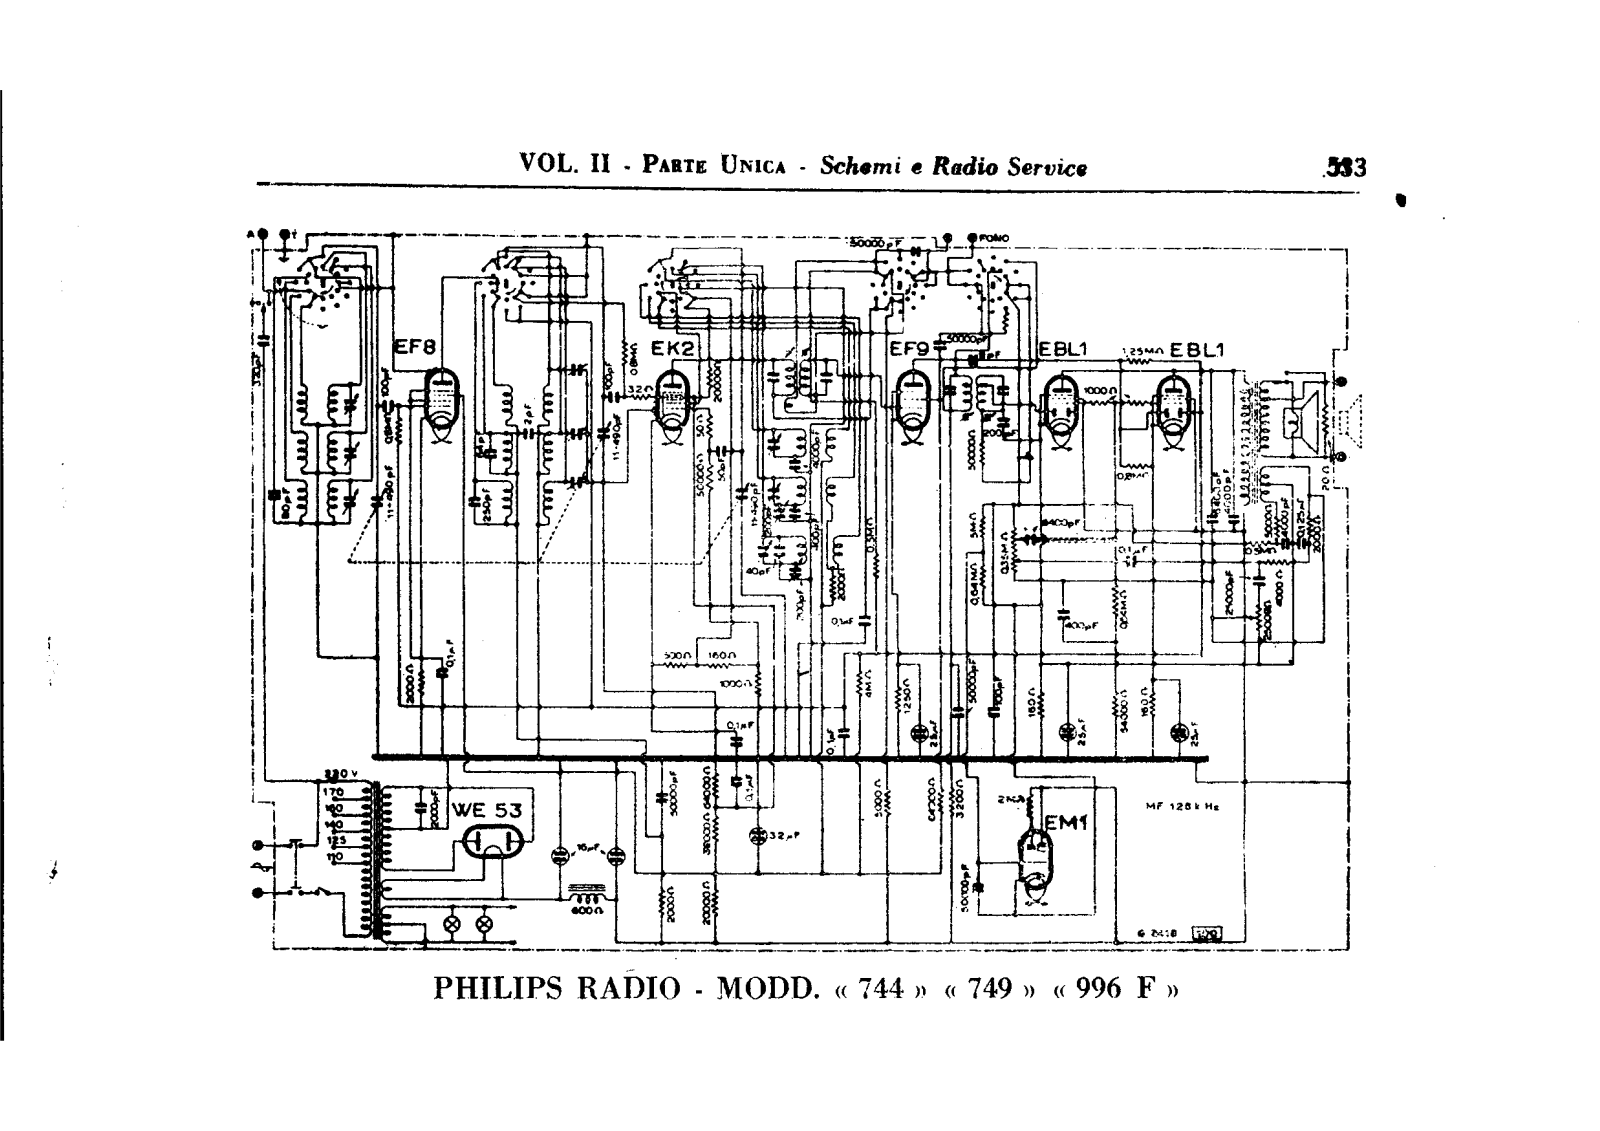 Philips 744, 749, 996f schematic